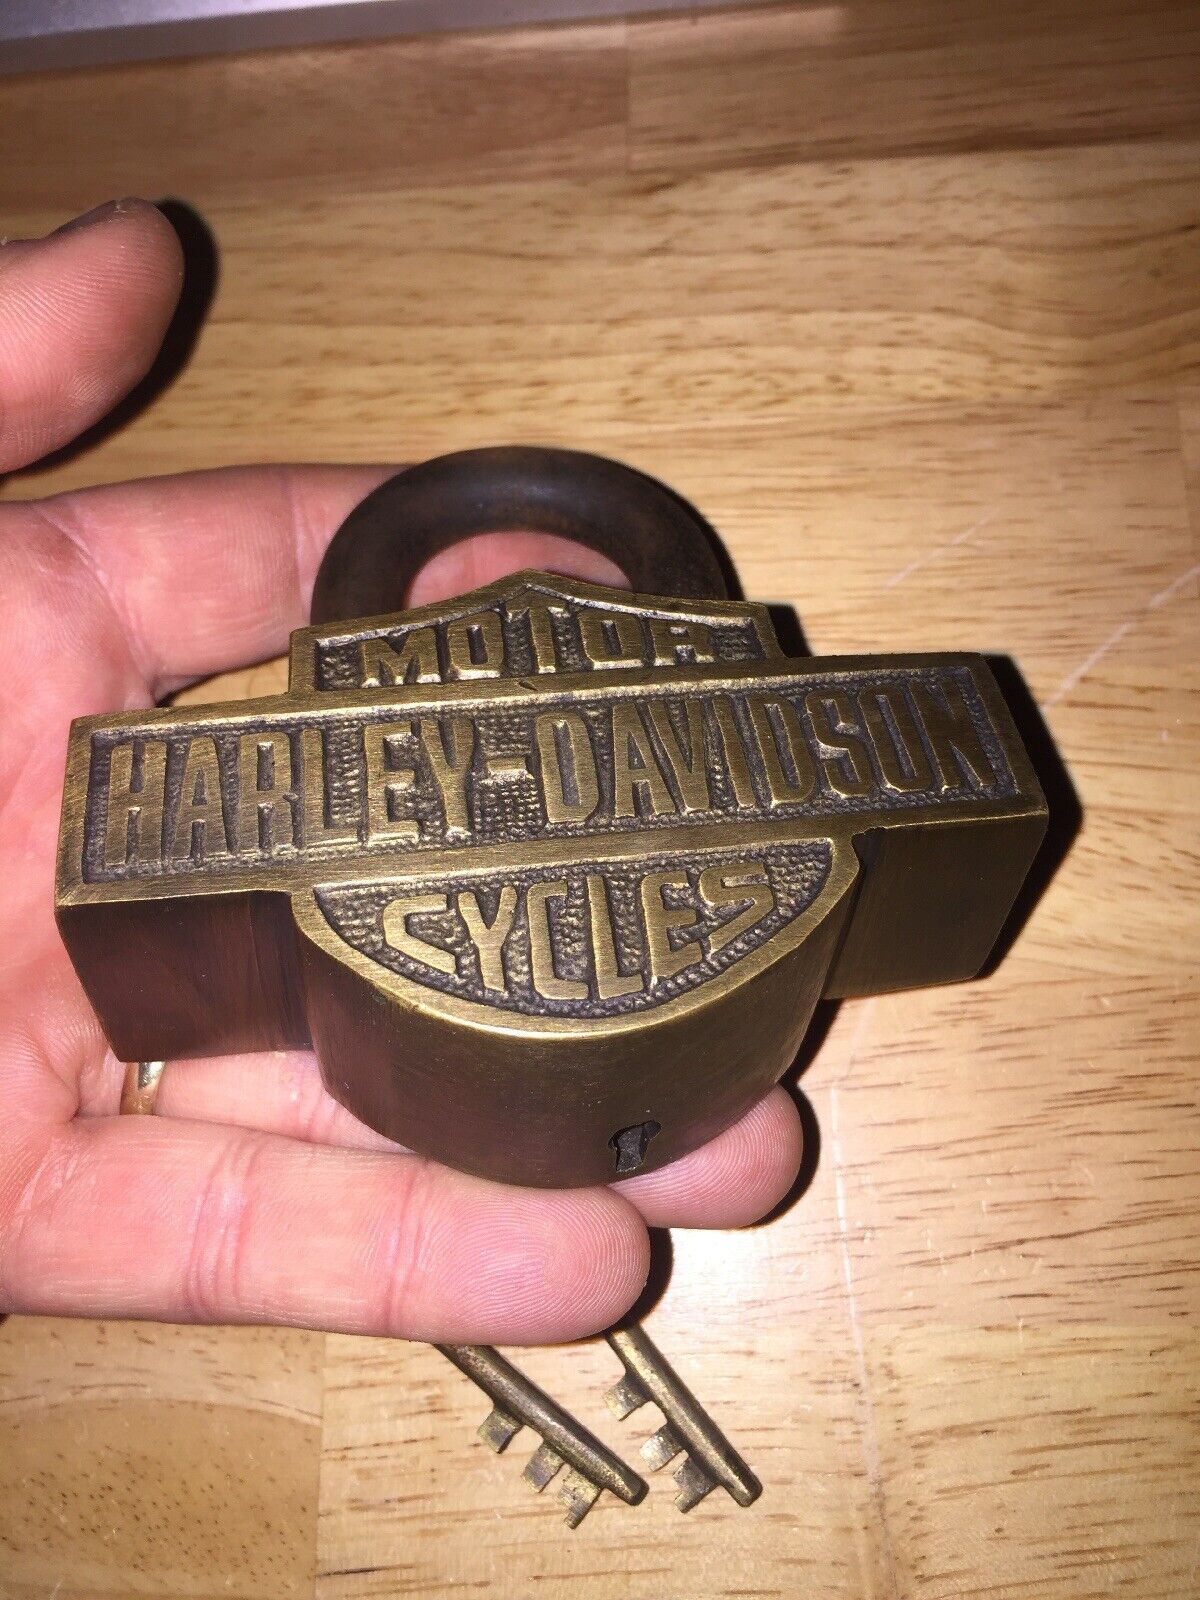 Harley Davidson Padlock Motorcycle Collector Key Lock Set Lot PATINA METAL 1+LBS